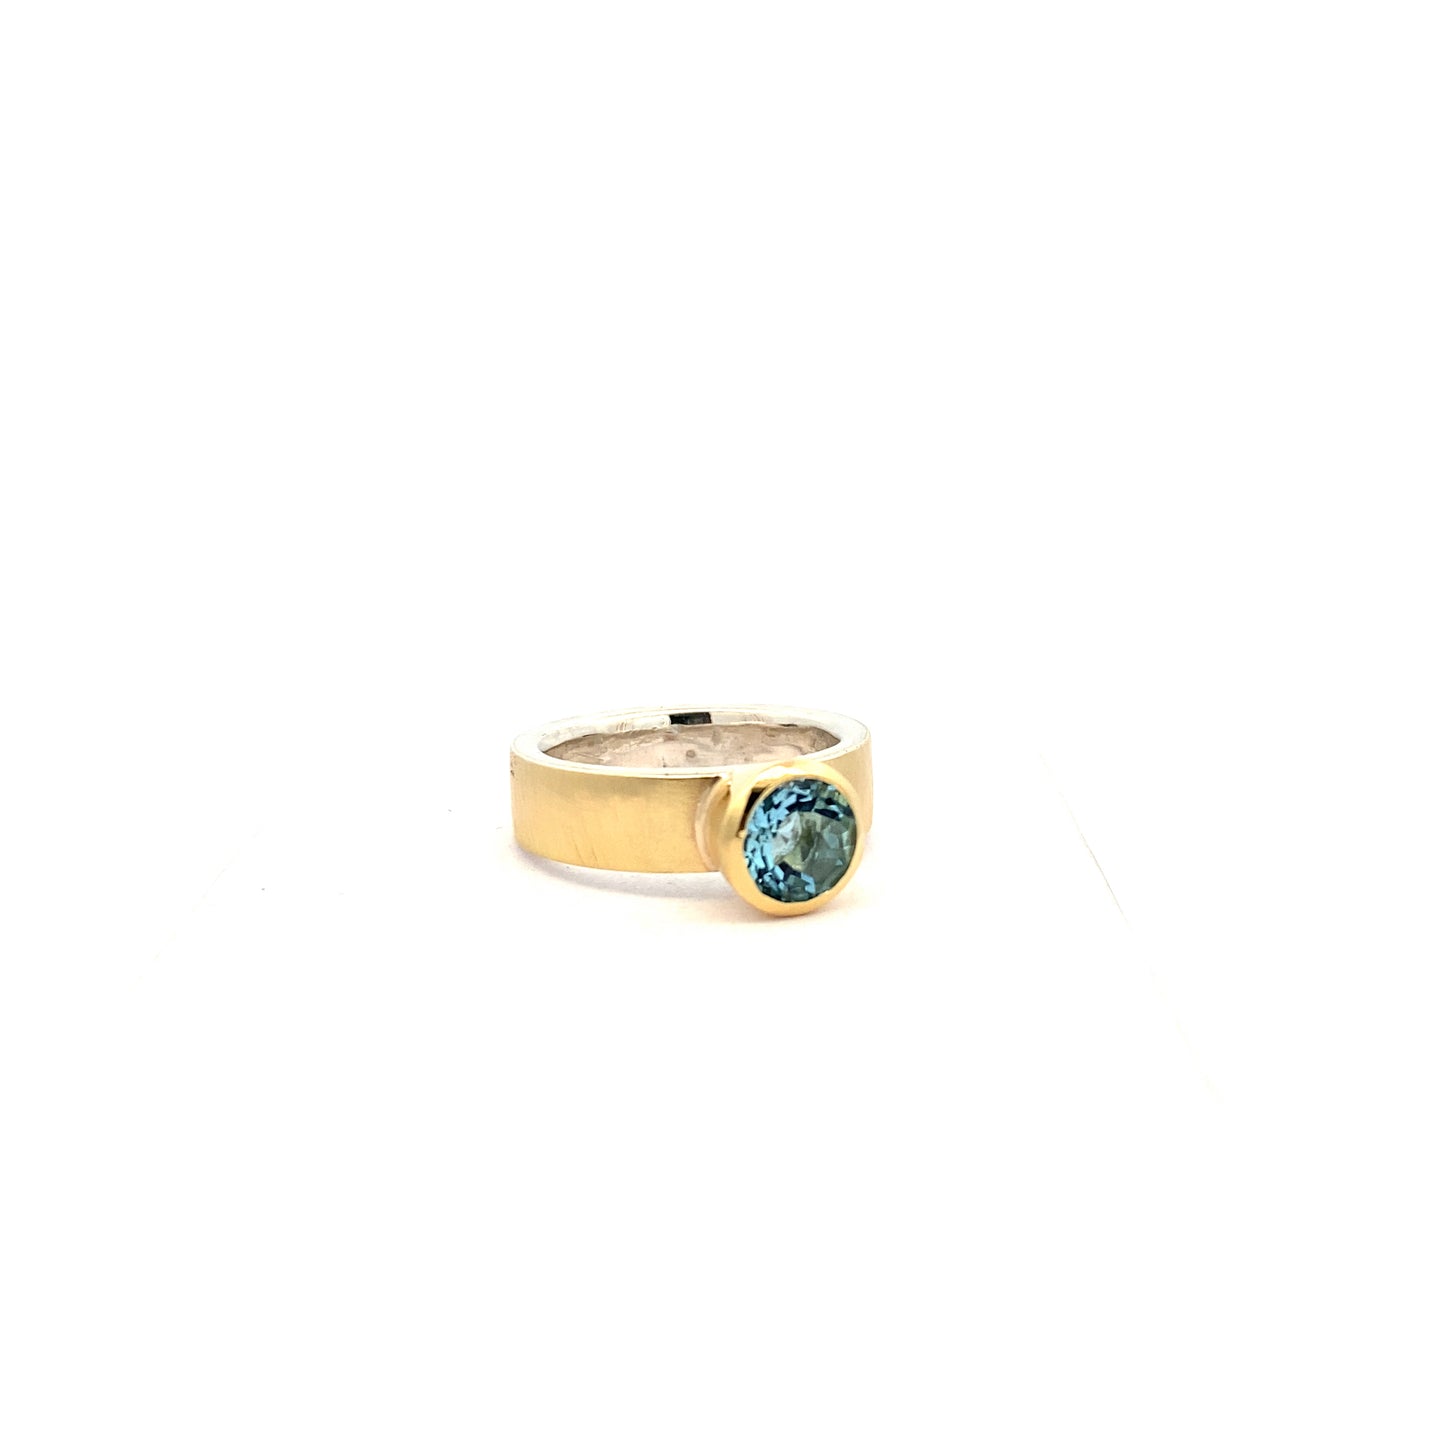 Round Aquamarine Ring with Gold Overlay